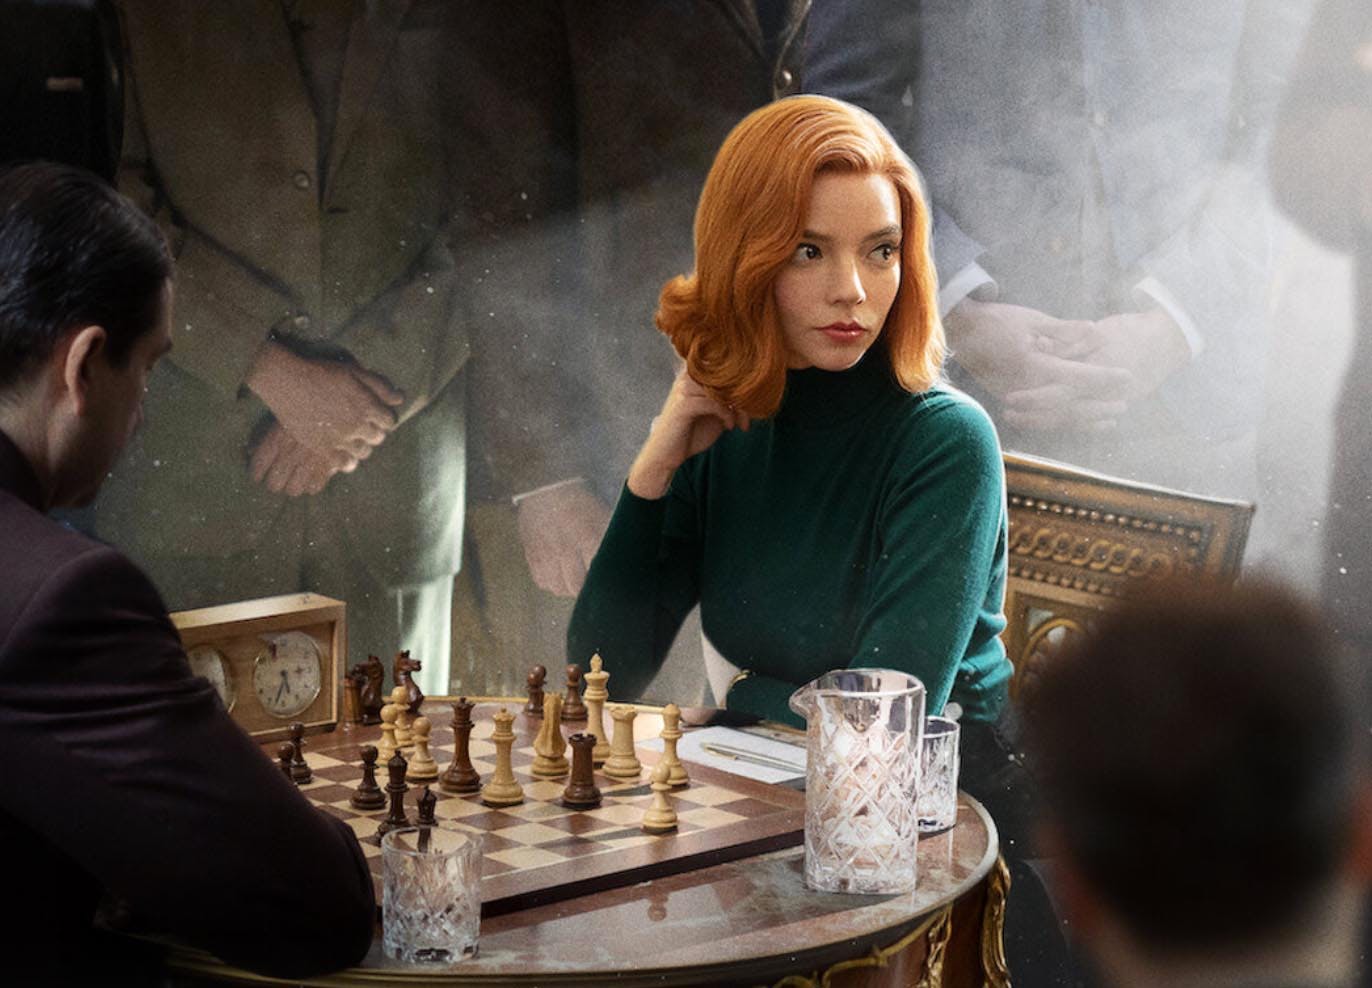 Nona Gaprindashvili, lenda do xadrez, processa Netflix pela série “The Queen’s Gambit”